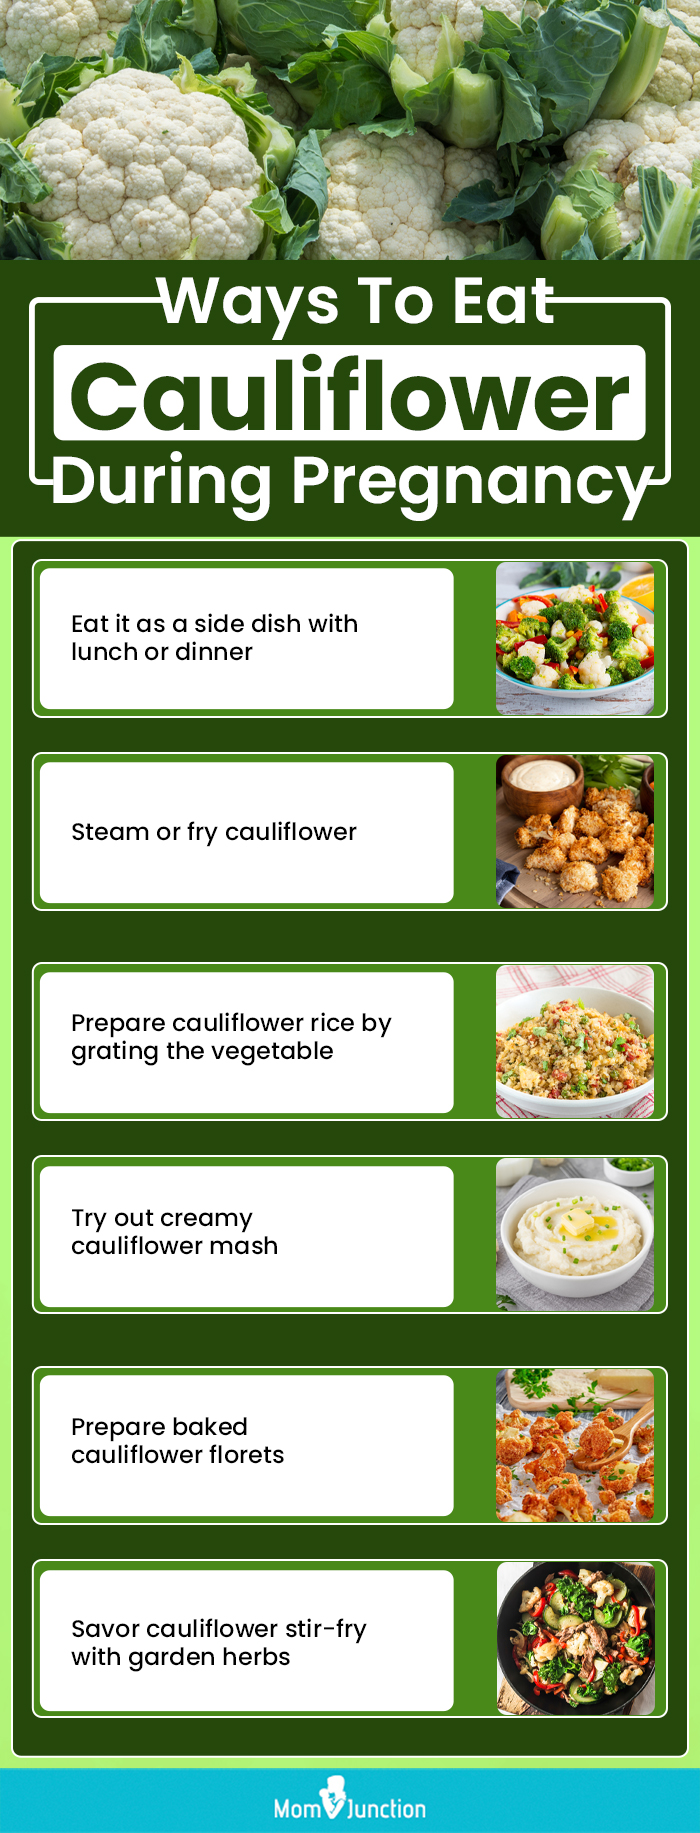 ways to eat cauliflower during pregnancy (infographic)